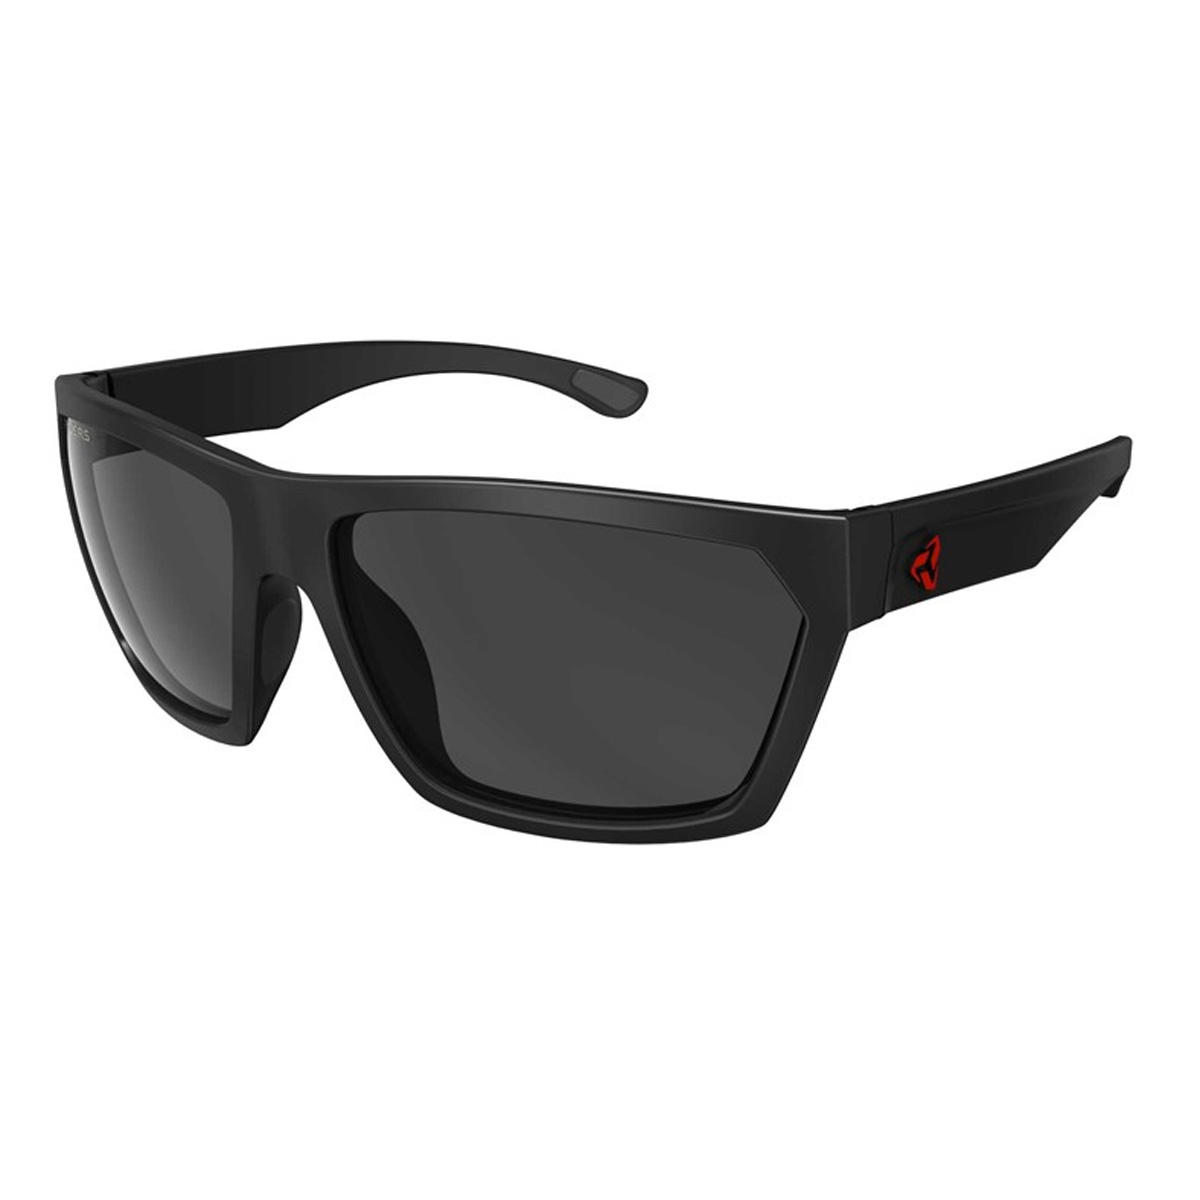 Ryders Eyewear Loops Velo-Polar Anti-Fog Sunglasses - image 1 of 1